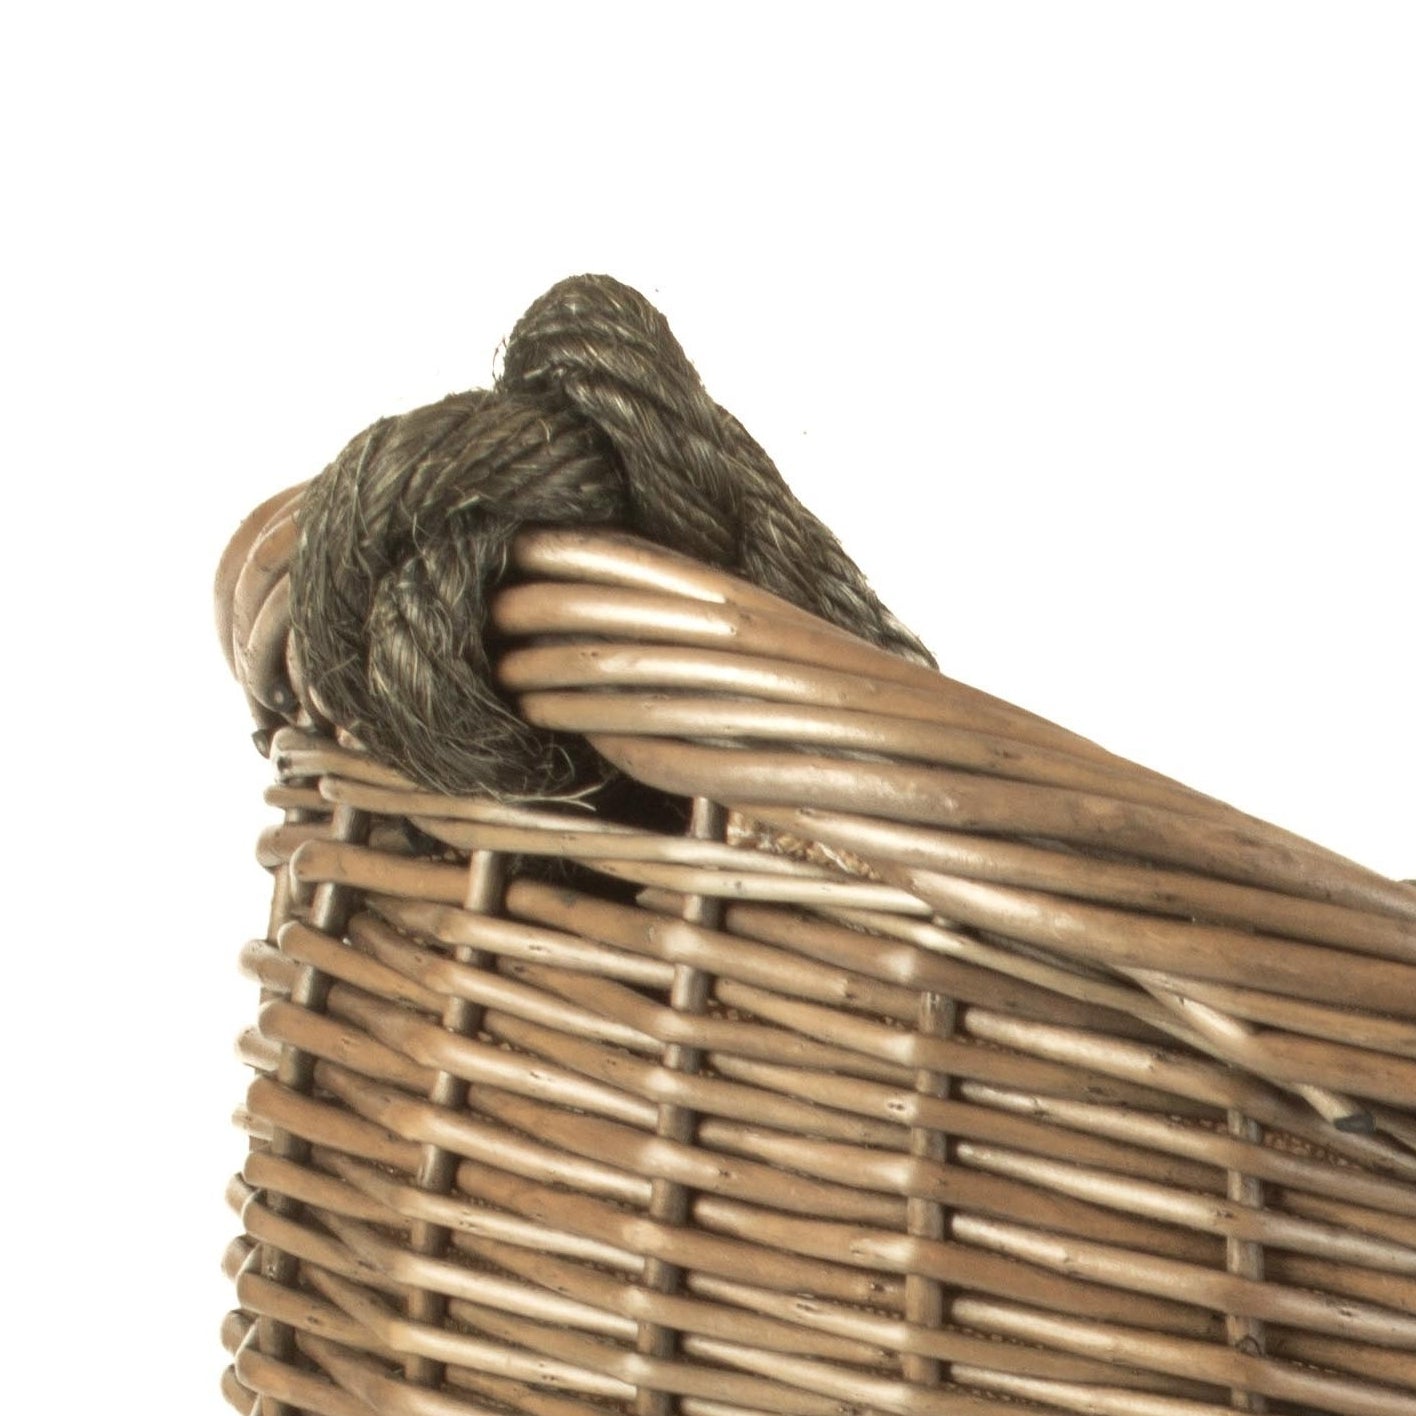 Red Hamper Wicker Antique Wash Rope Handled Carrying Basket